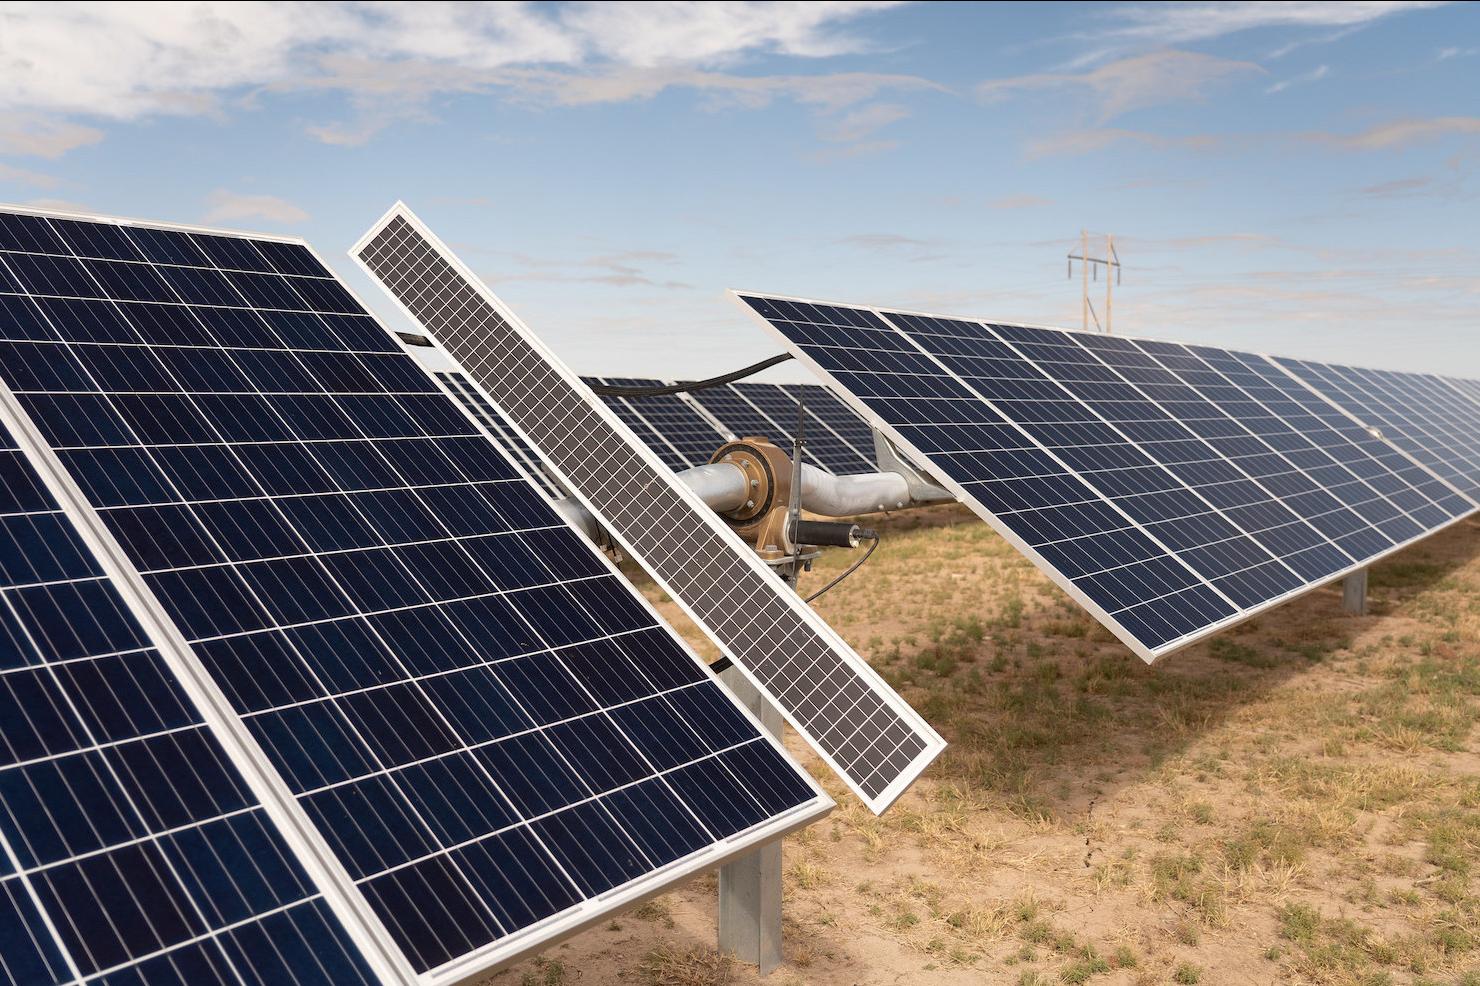 solar panels - solar installation in texas - clean energy